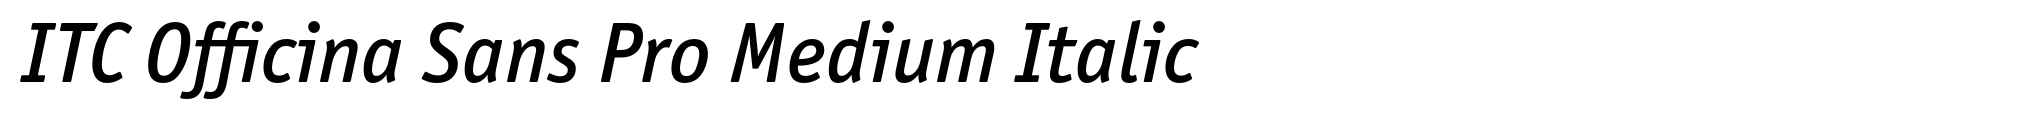 ITC Officina Sans Pro Medium Italic image